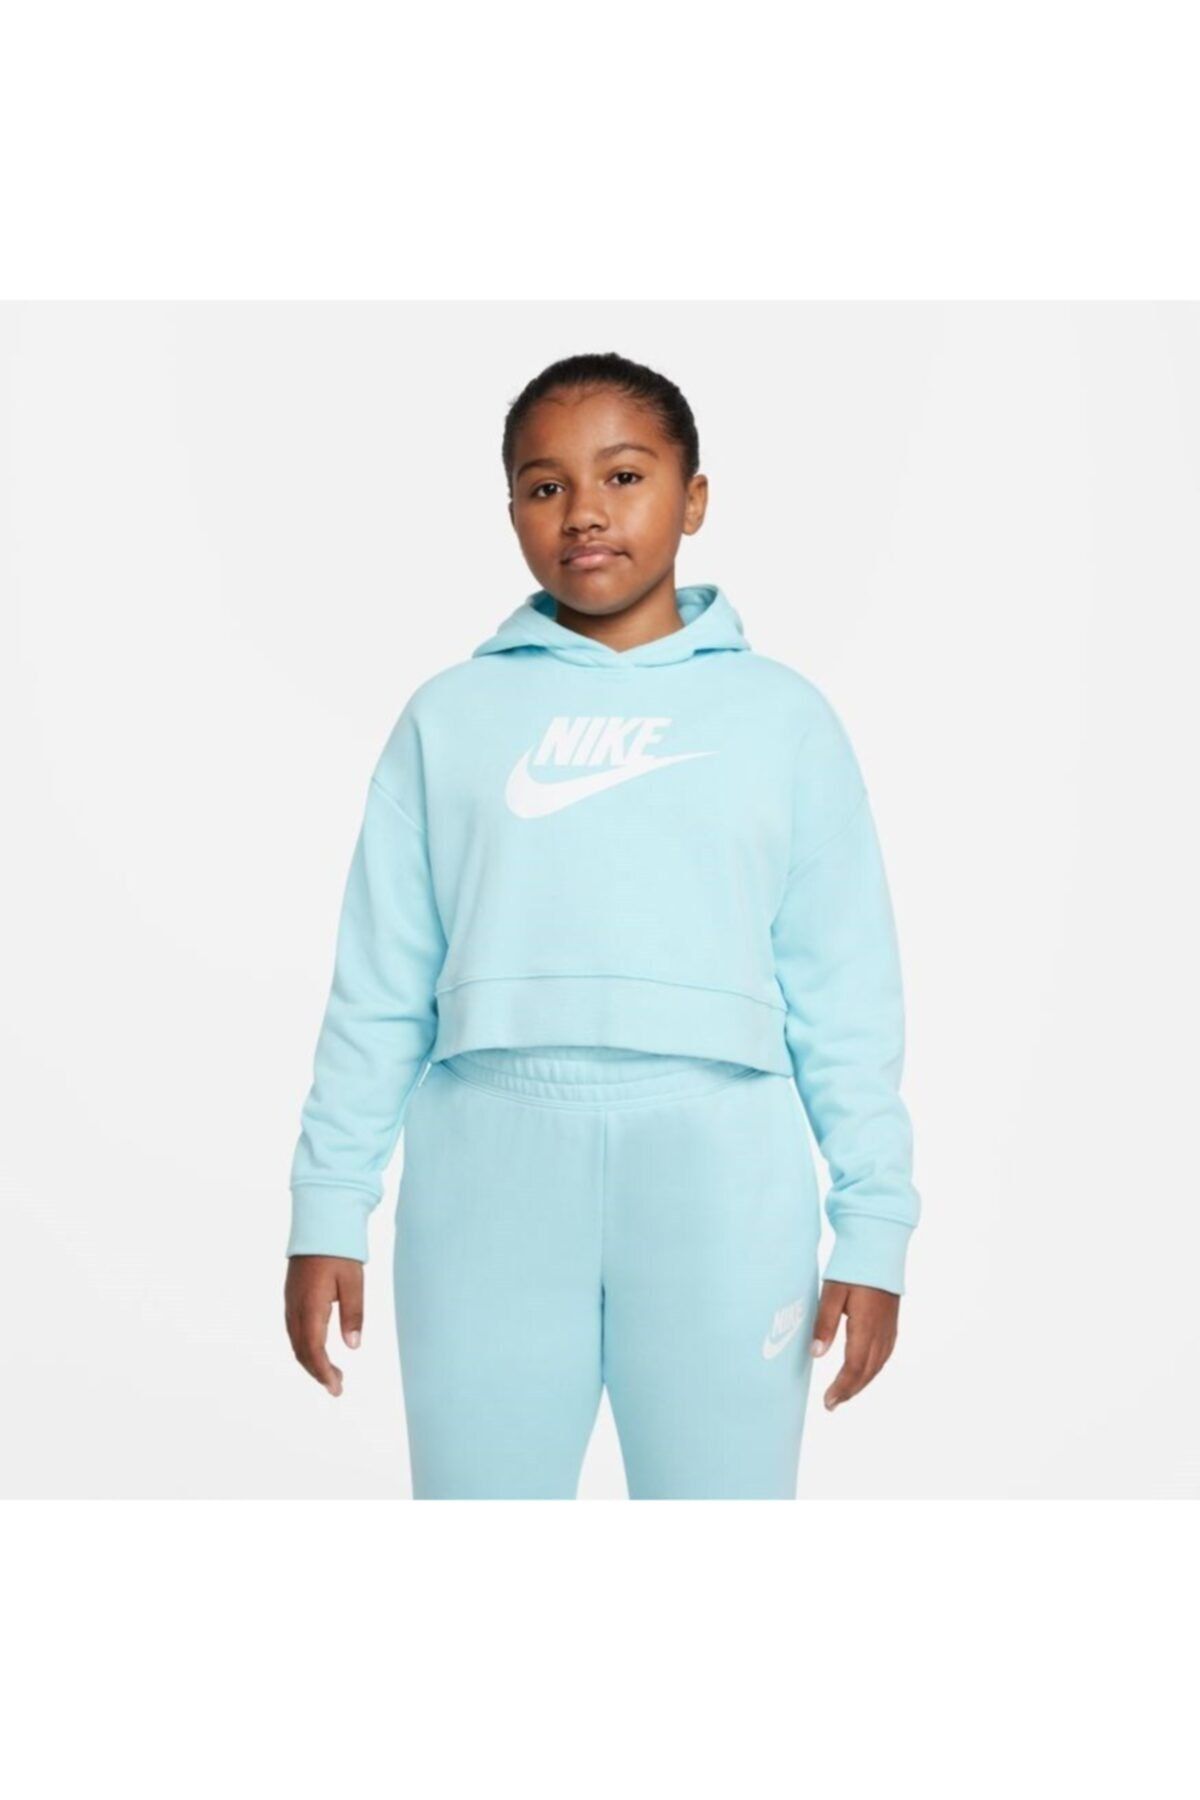 Nike Blue Sportswear Essential Cropped Sweatshirt Nike